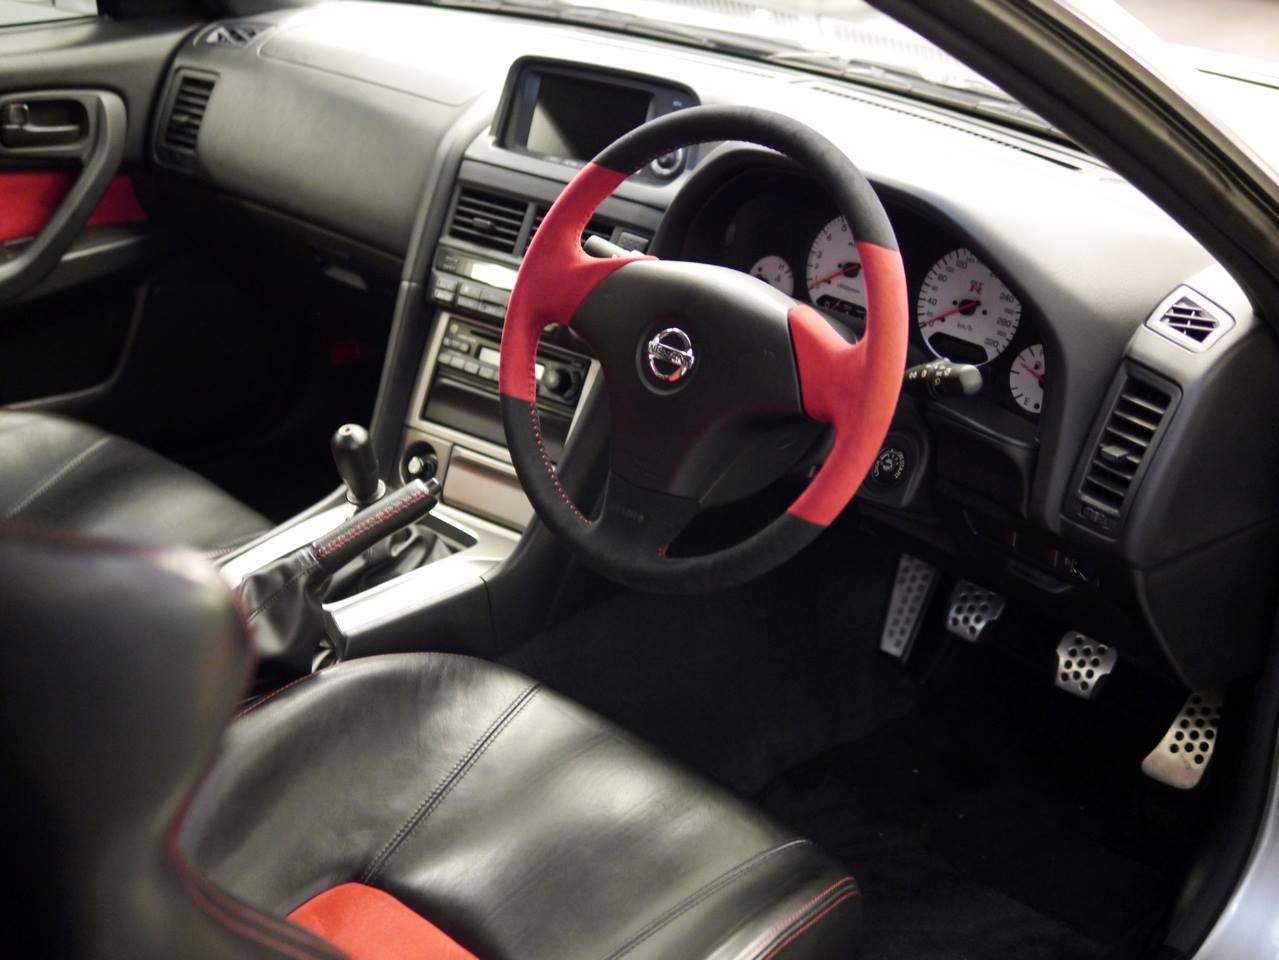 Редкий Nissan Skyline GT-R Nismo Z-Tune продается за 510,000